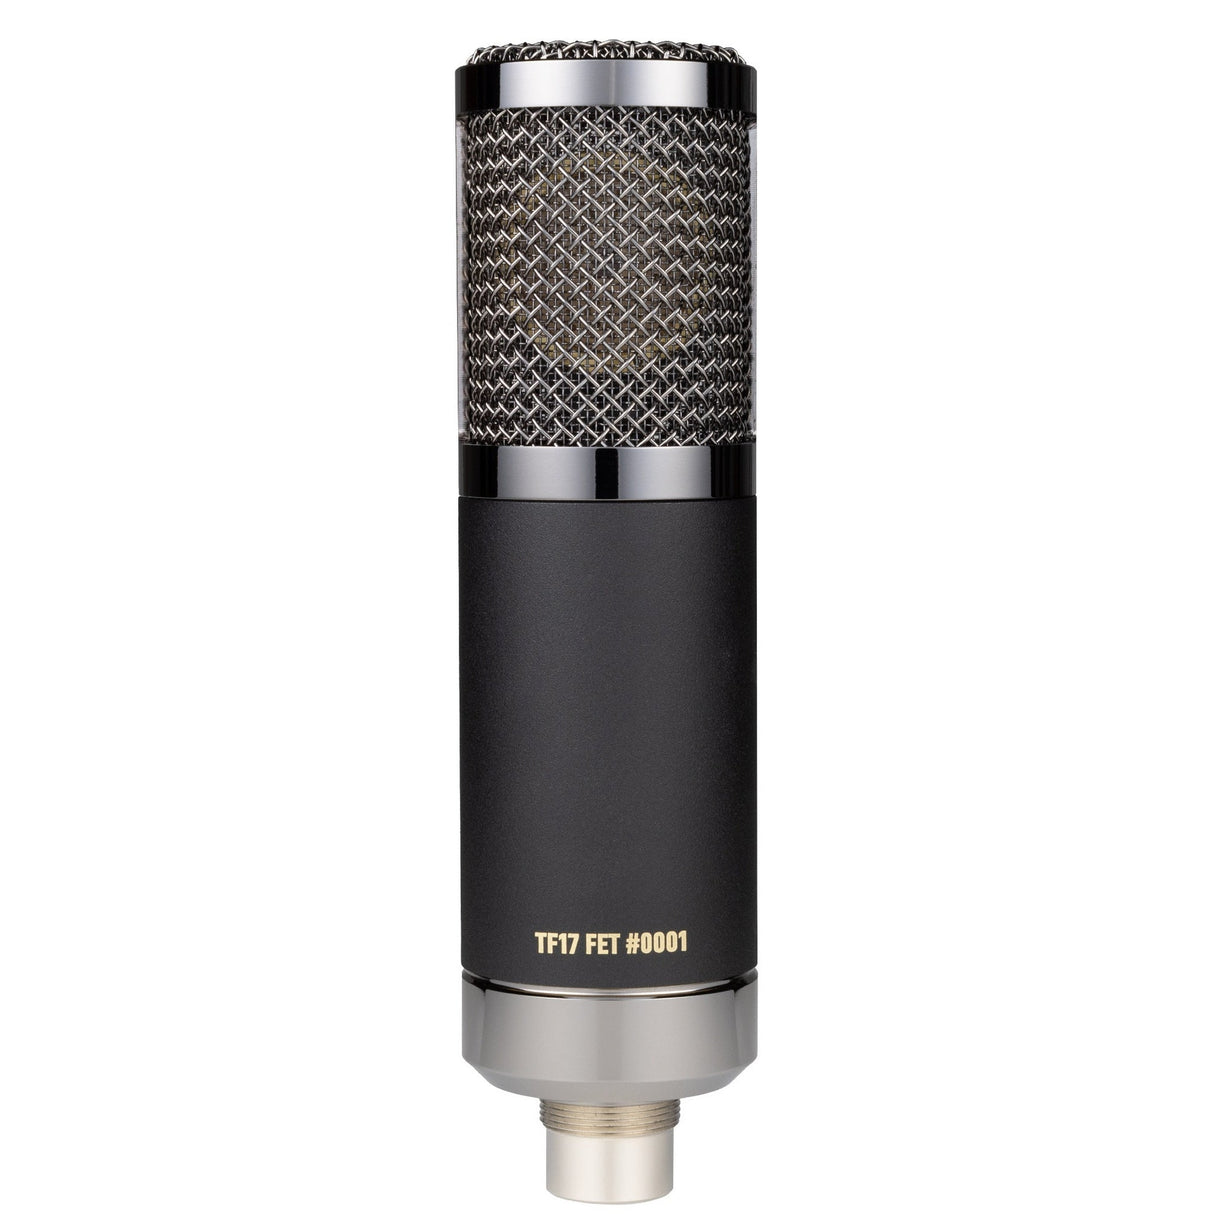 Telefunken TF17 FET Large Diaphragm Cardioid Microphone